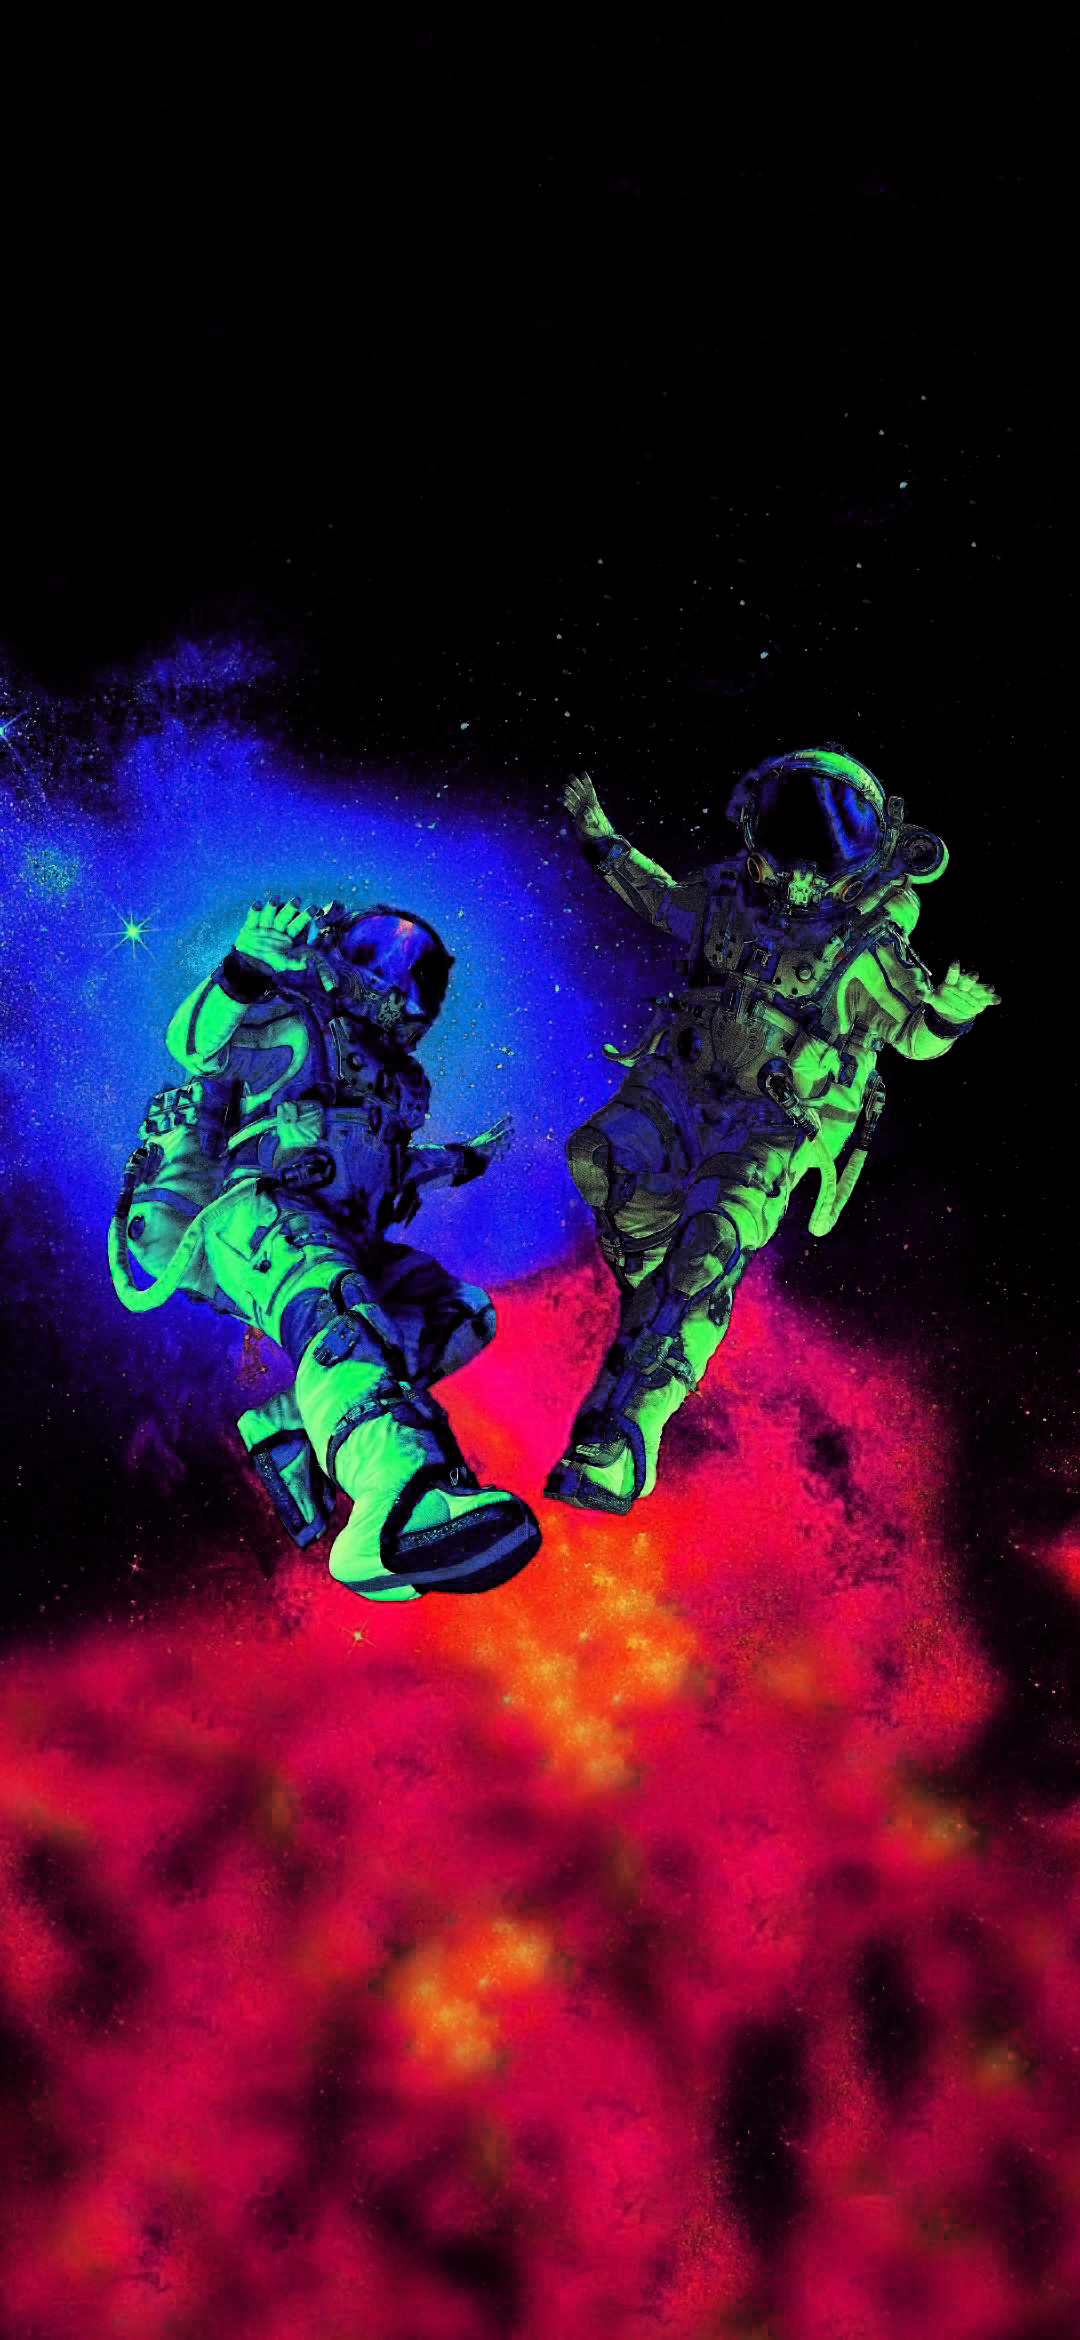 astronauts black oled amoled iphone wallpaper astronaut space